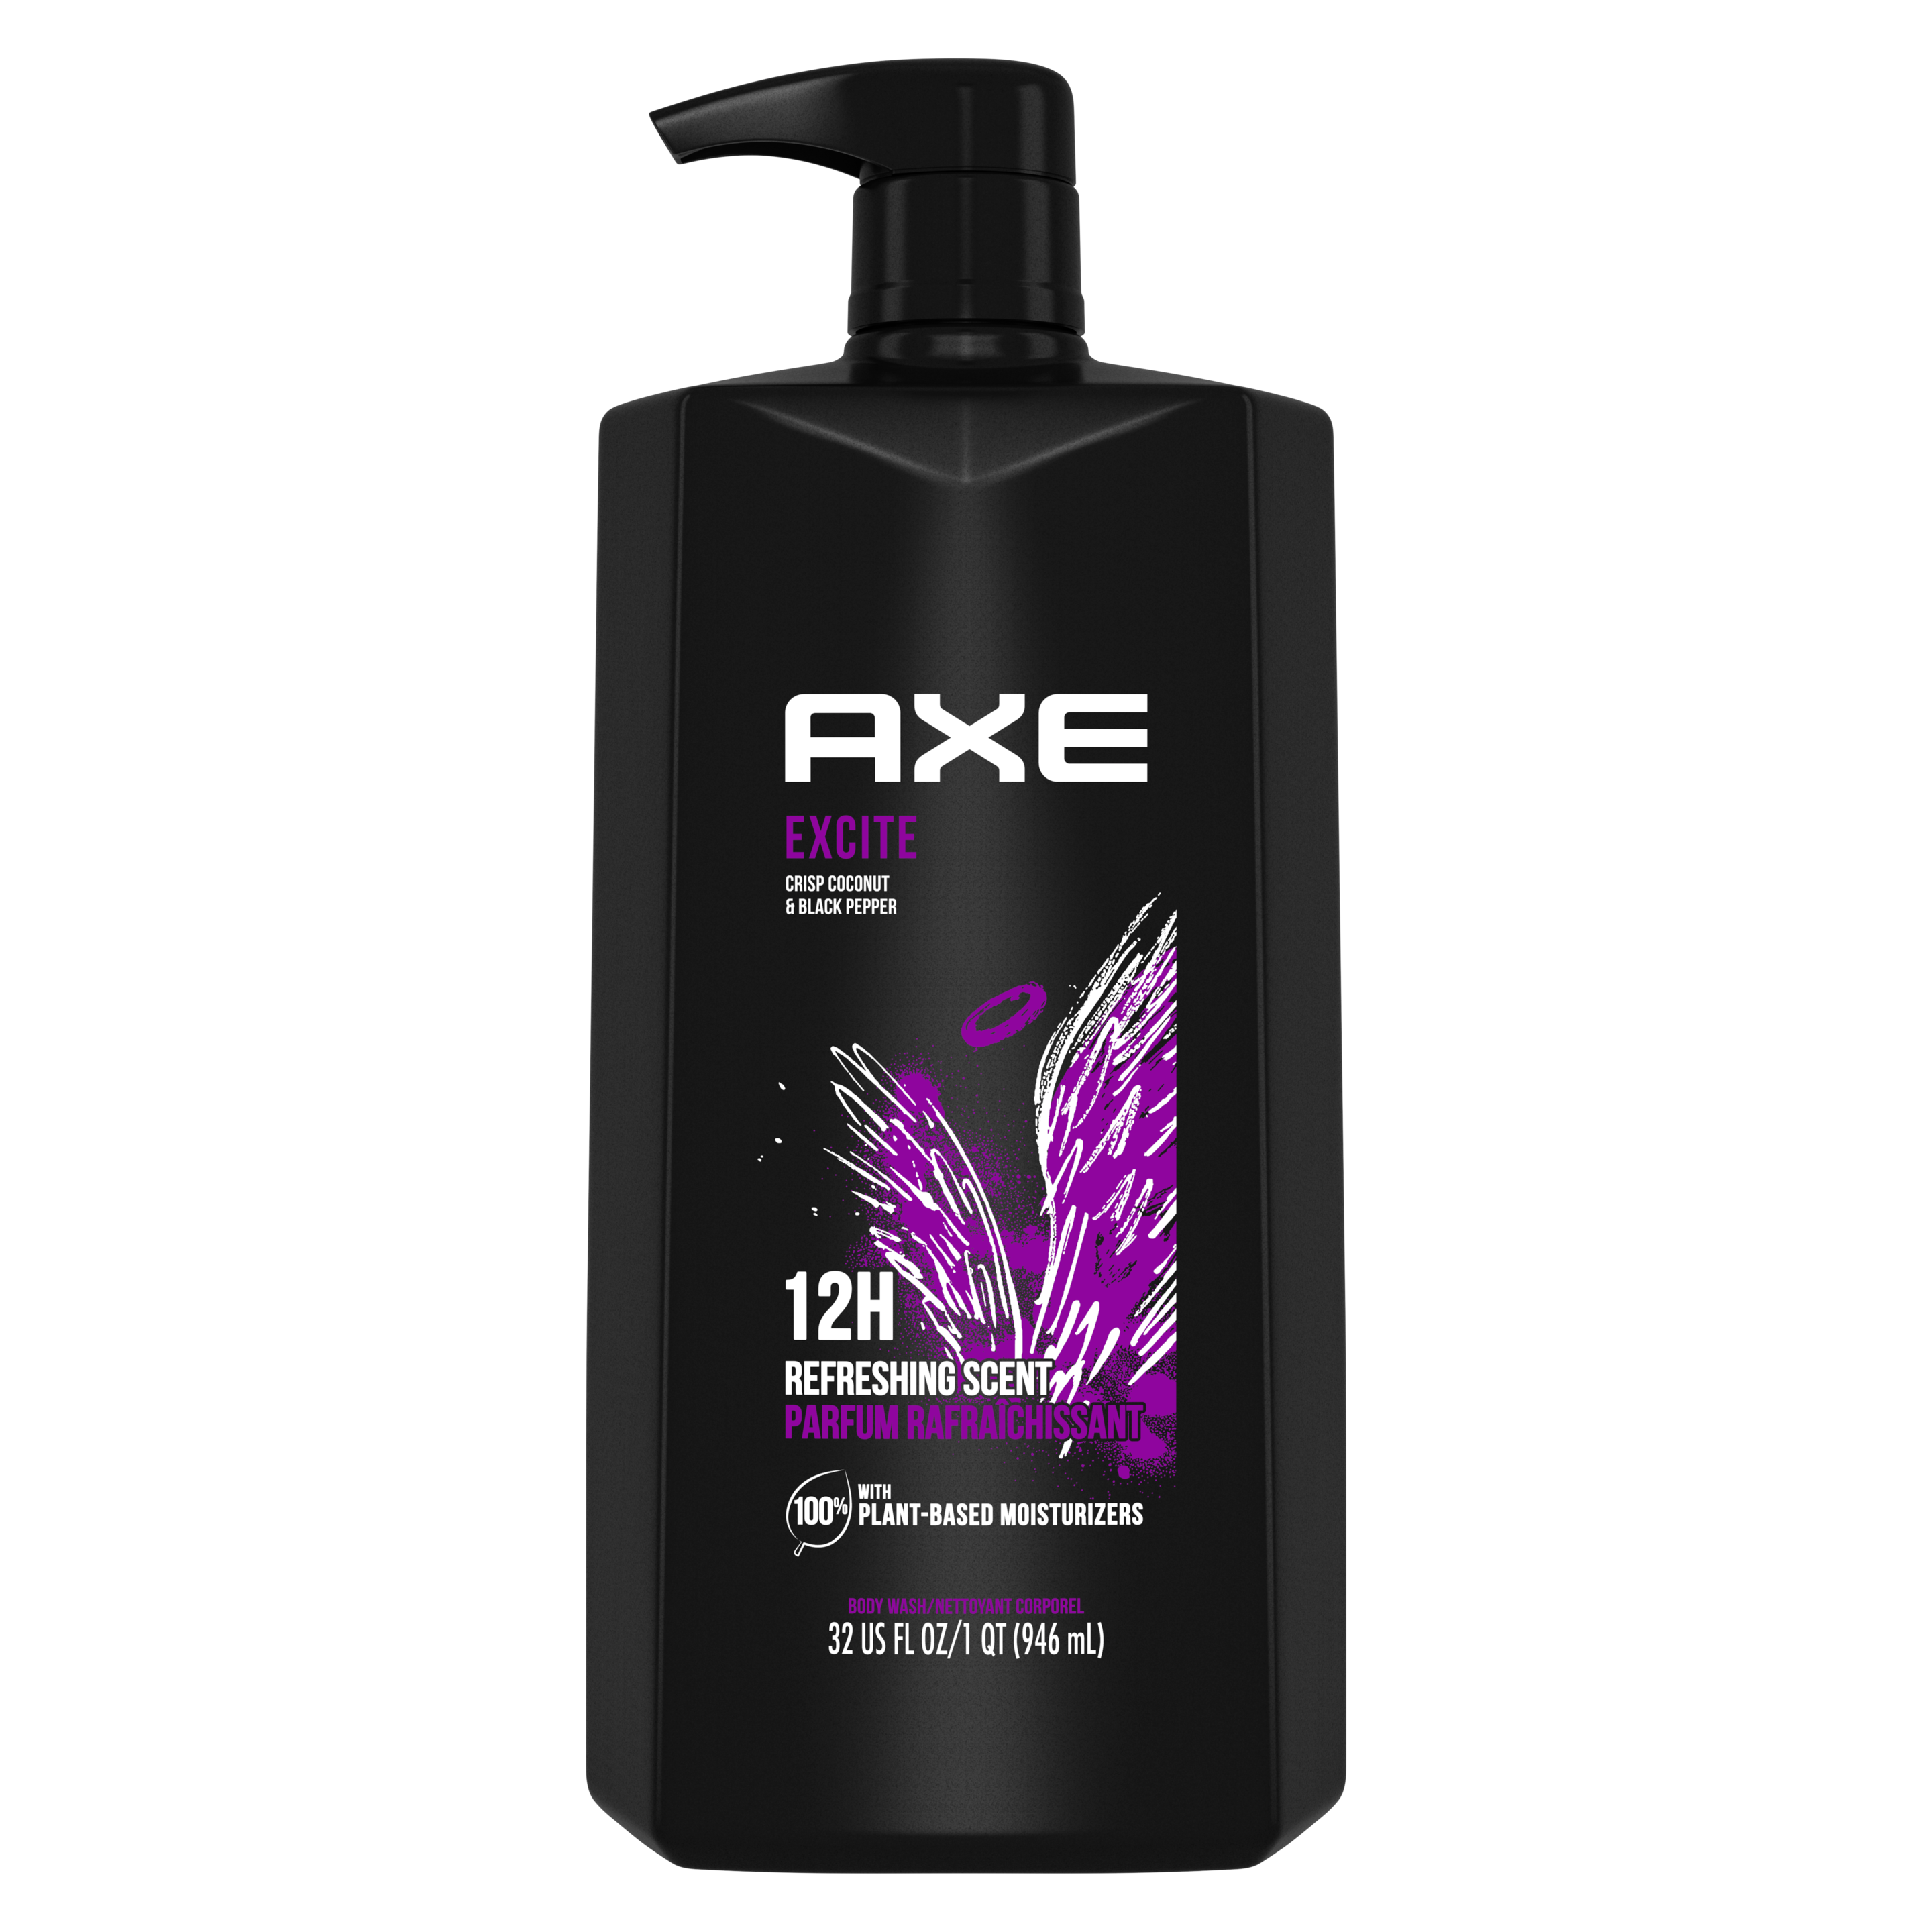 AXE Excite Body Wash Pump